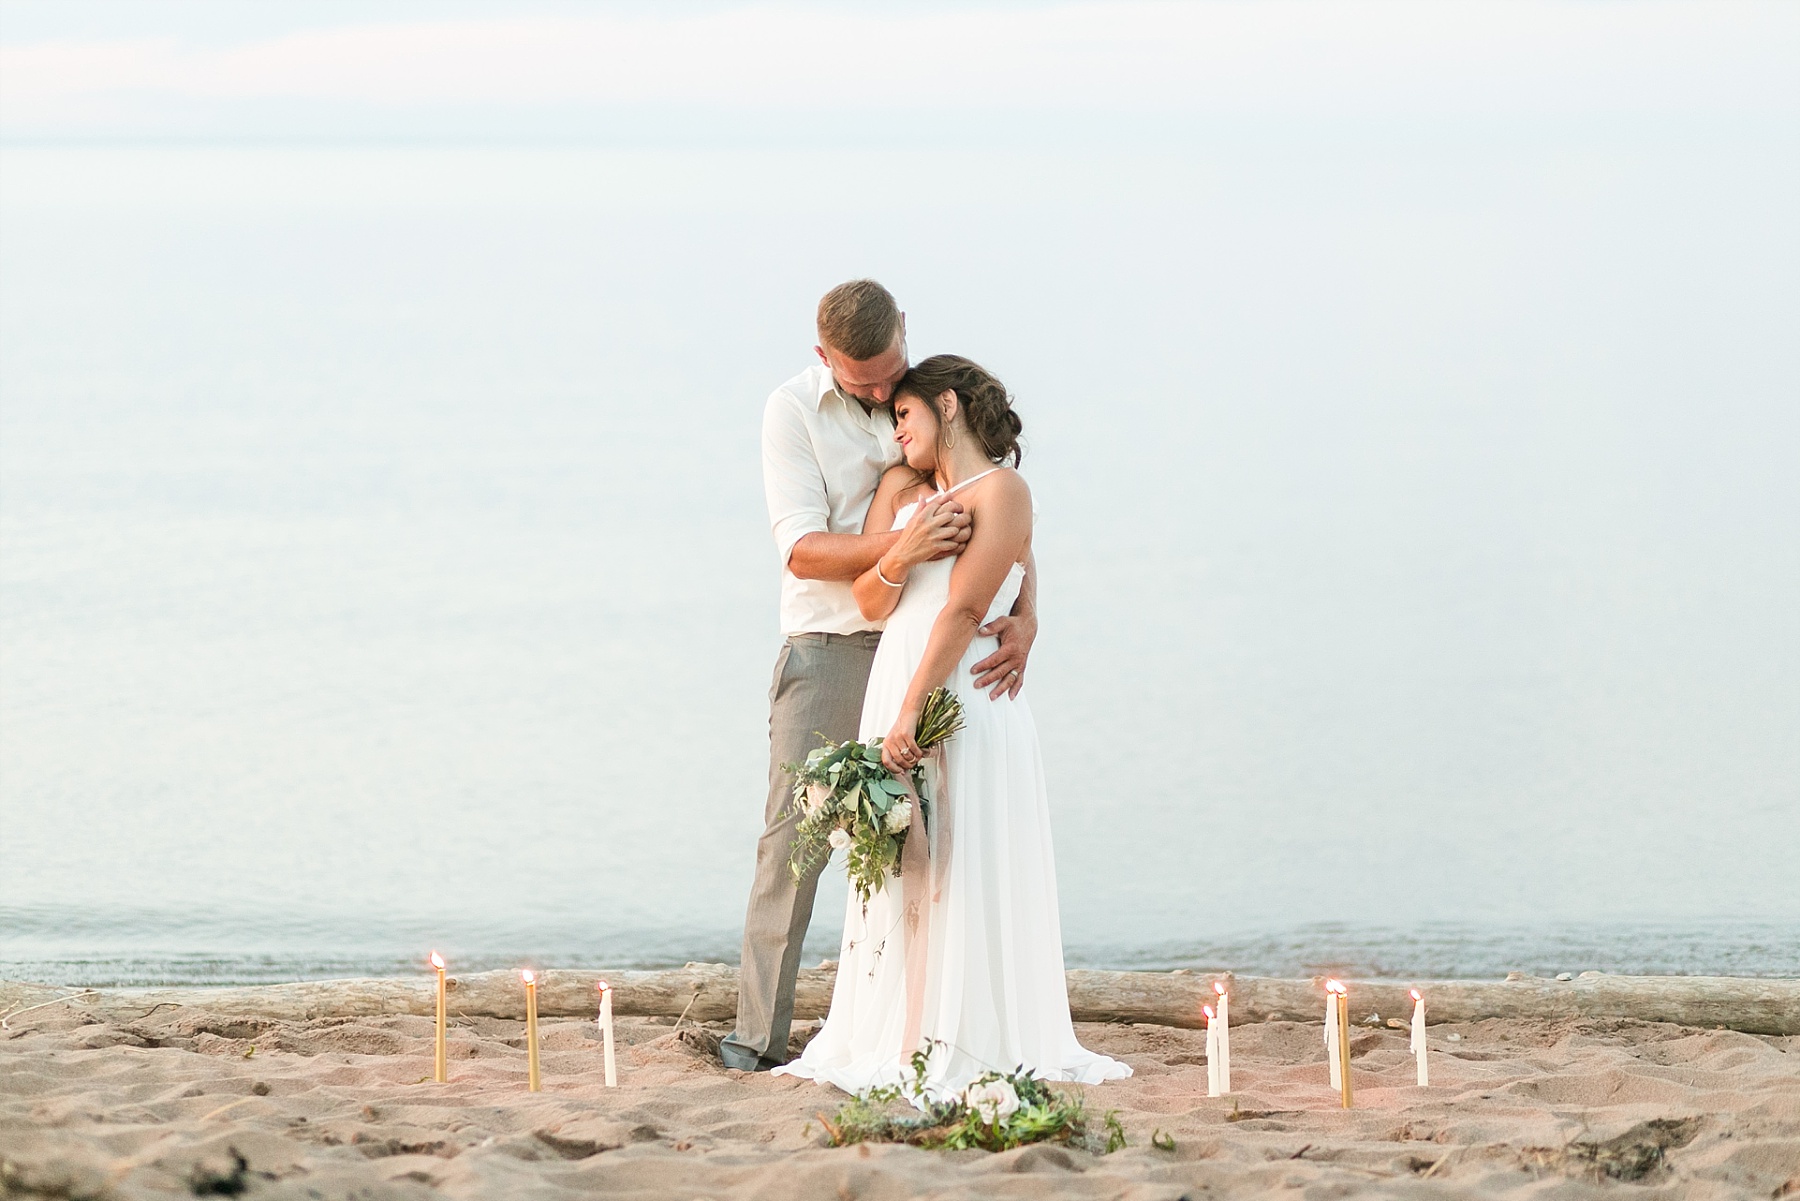 Ashley & James' wedding on the shores of Lake Superior.